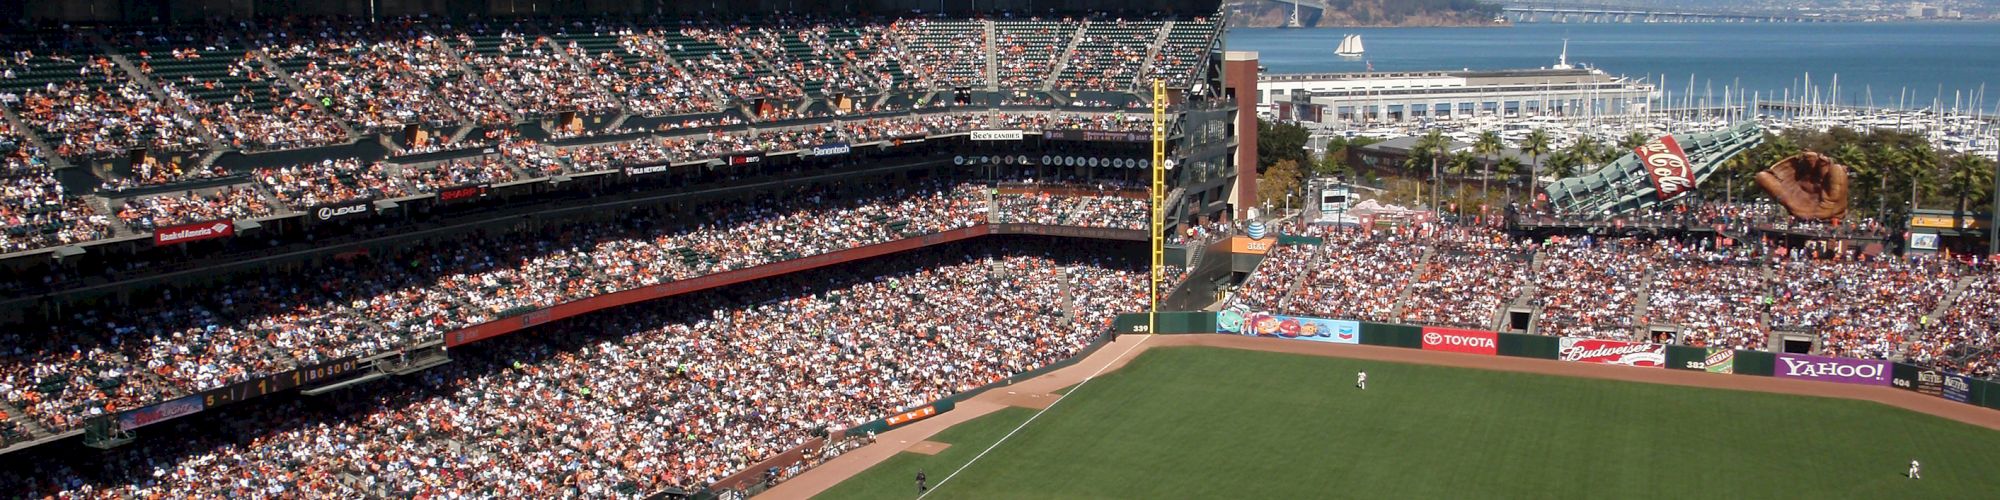 Baseball Att Park Stadium Of San Francisco Stock Photo - Download